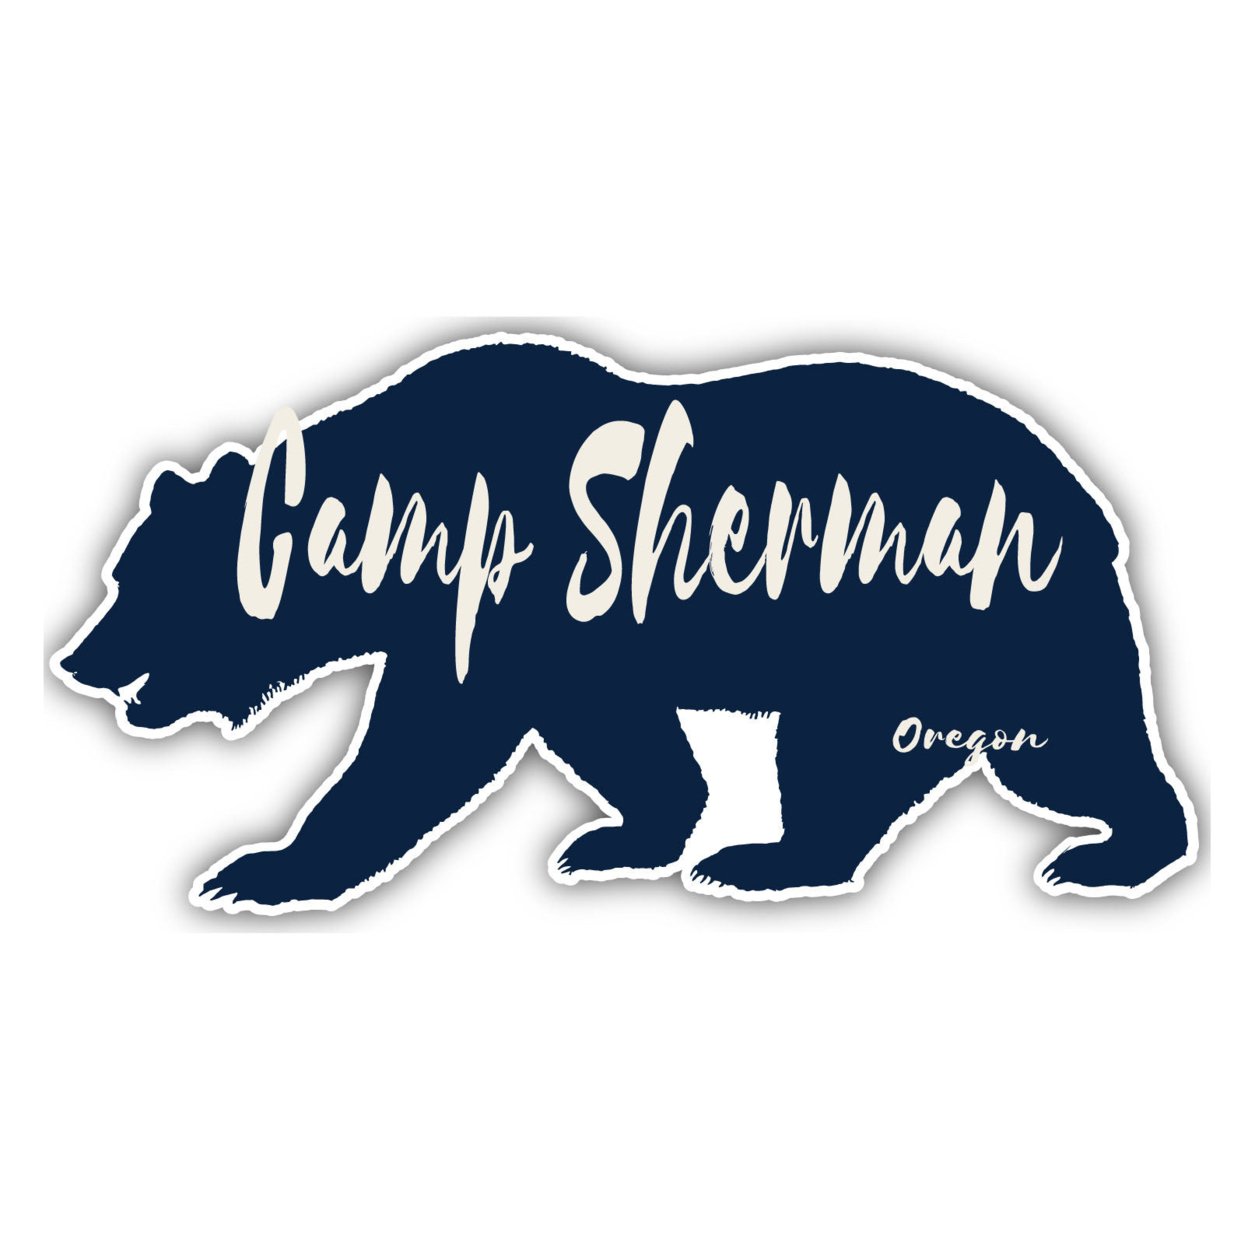 Camp Sherman Oregon Souvenir Decorative Stickers (Choose Theme And Size) - Single Unit, 4-Inch, Bear